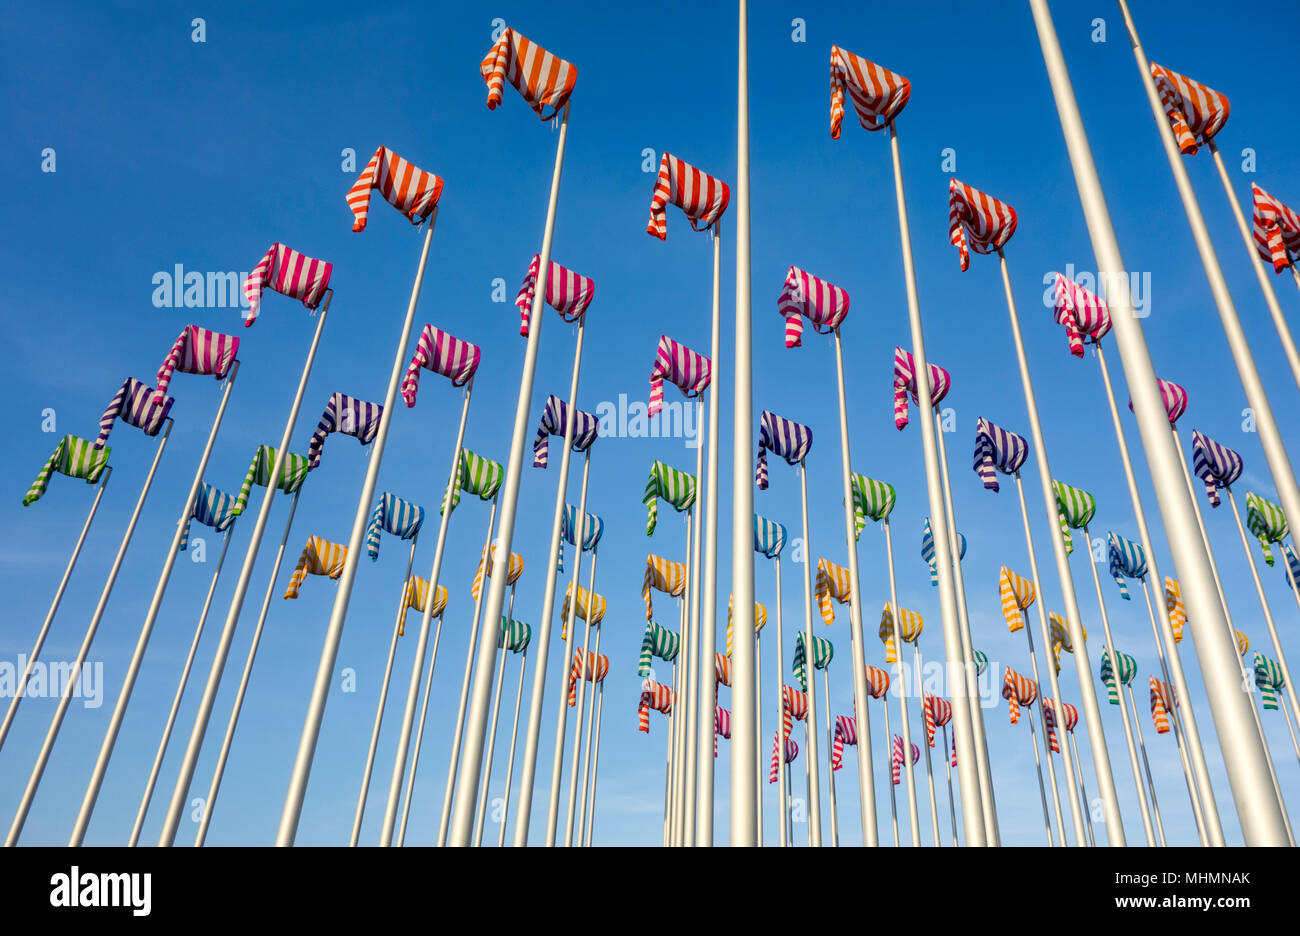 Artwork Le vent souffle où il veut by artist Daniel Buren, hundred flag poles with colorful windsocks at Nieuwpoort / Nieuport, West Flanders, Belgium Stock Photo